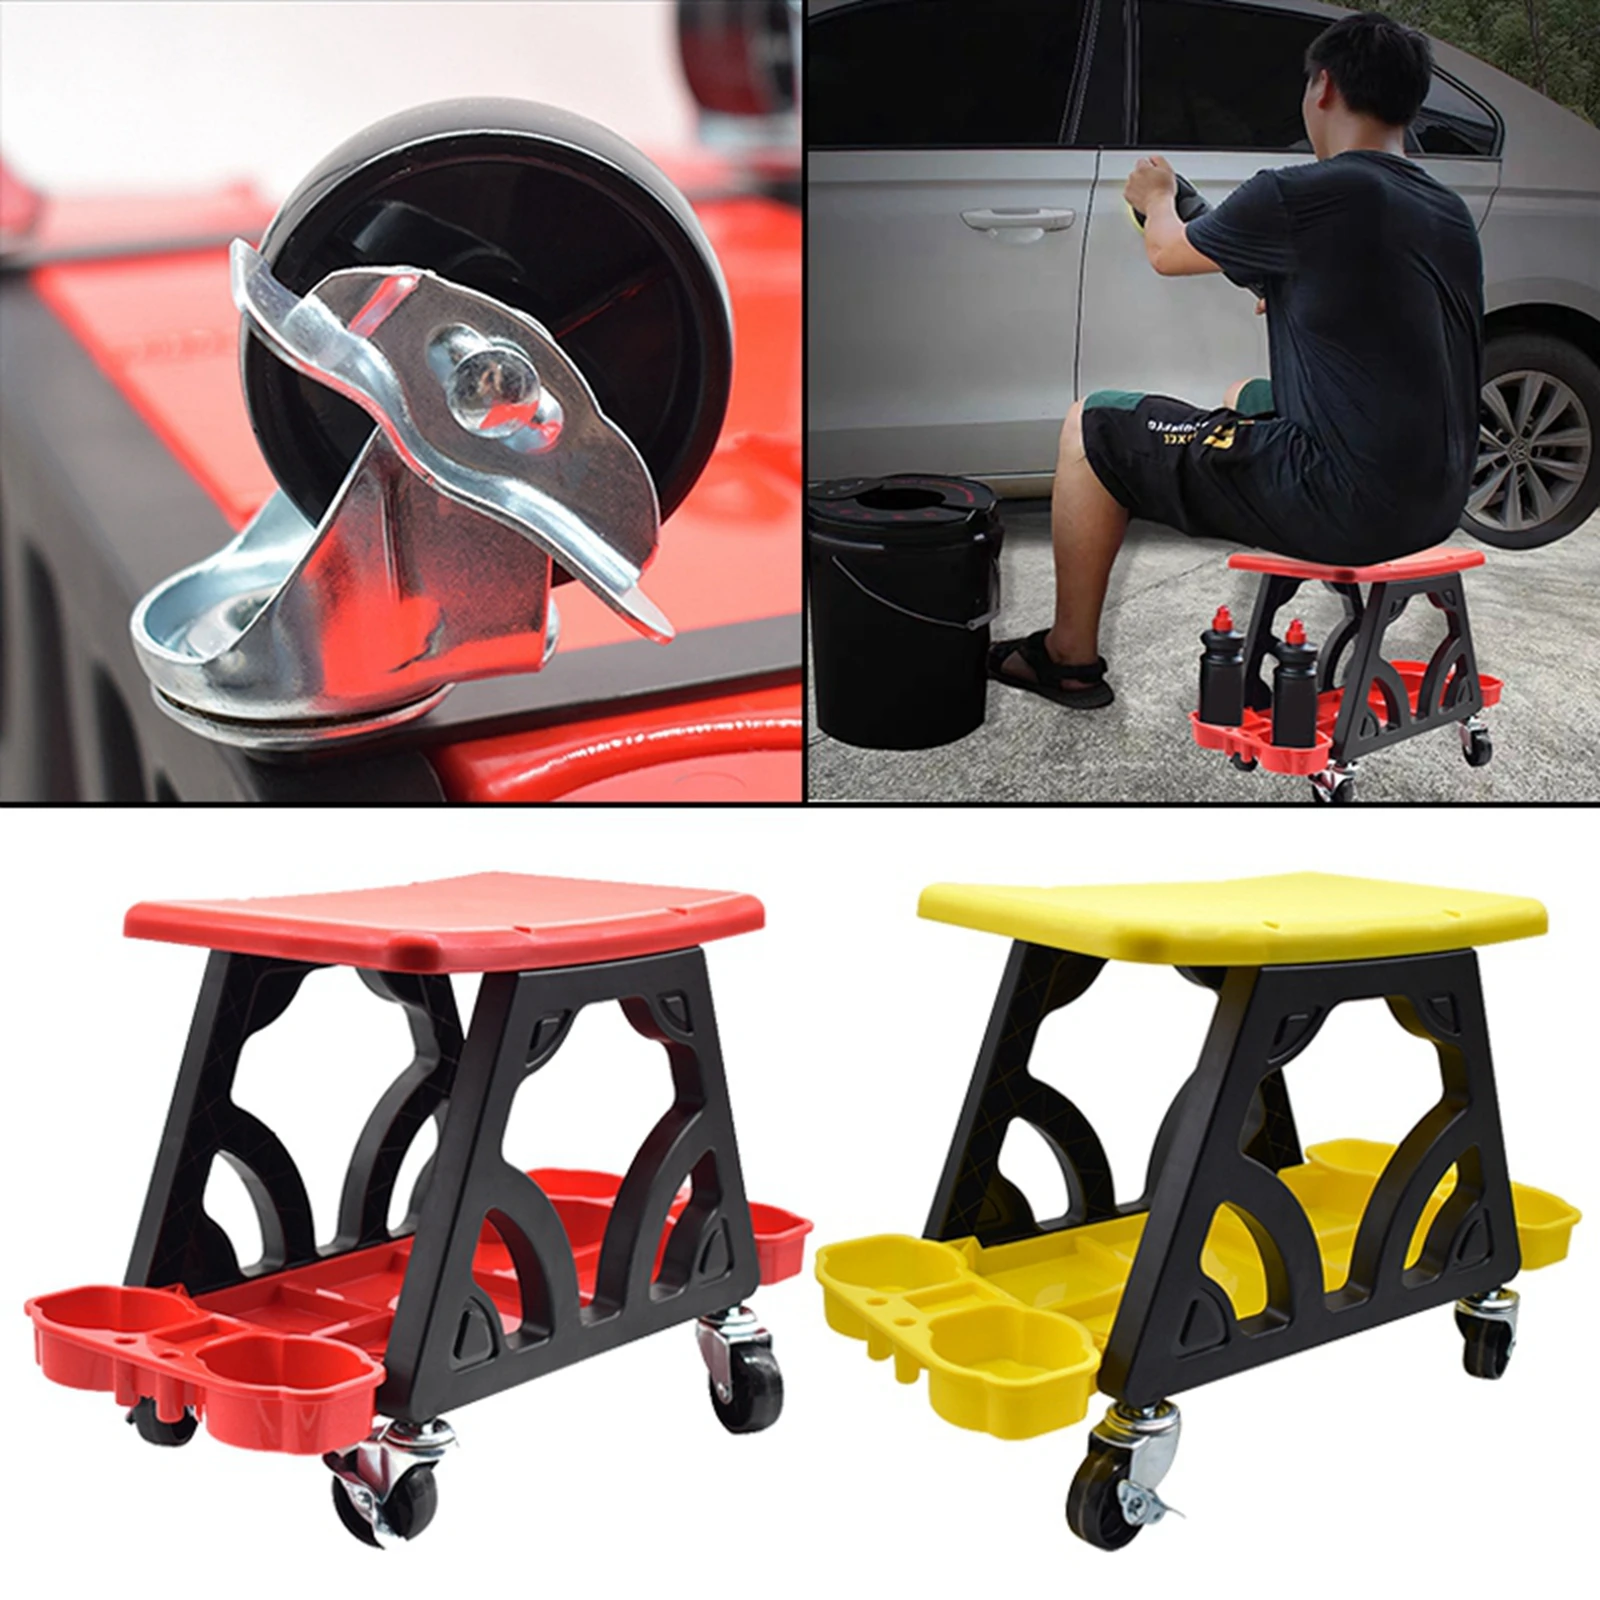 Car Detailing Stool Chair Mobile Rolling Seat Creeper for Car Washing Garage